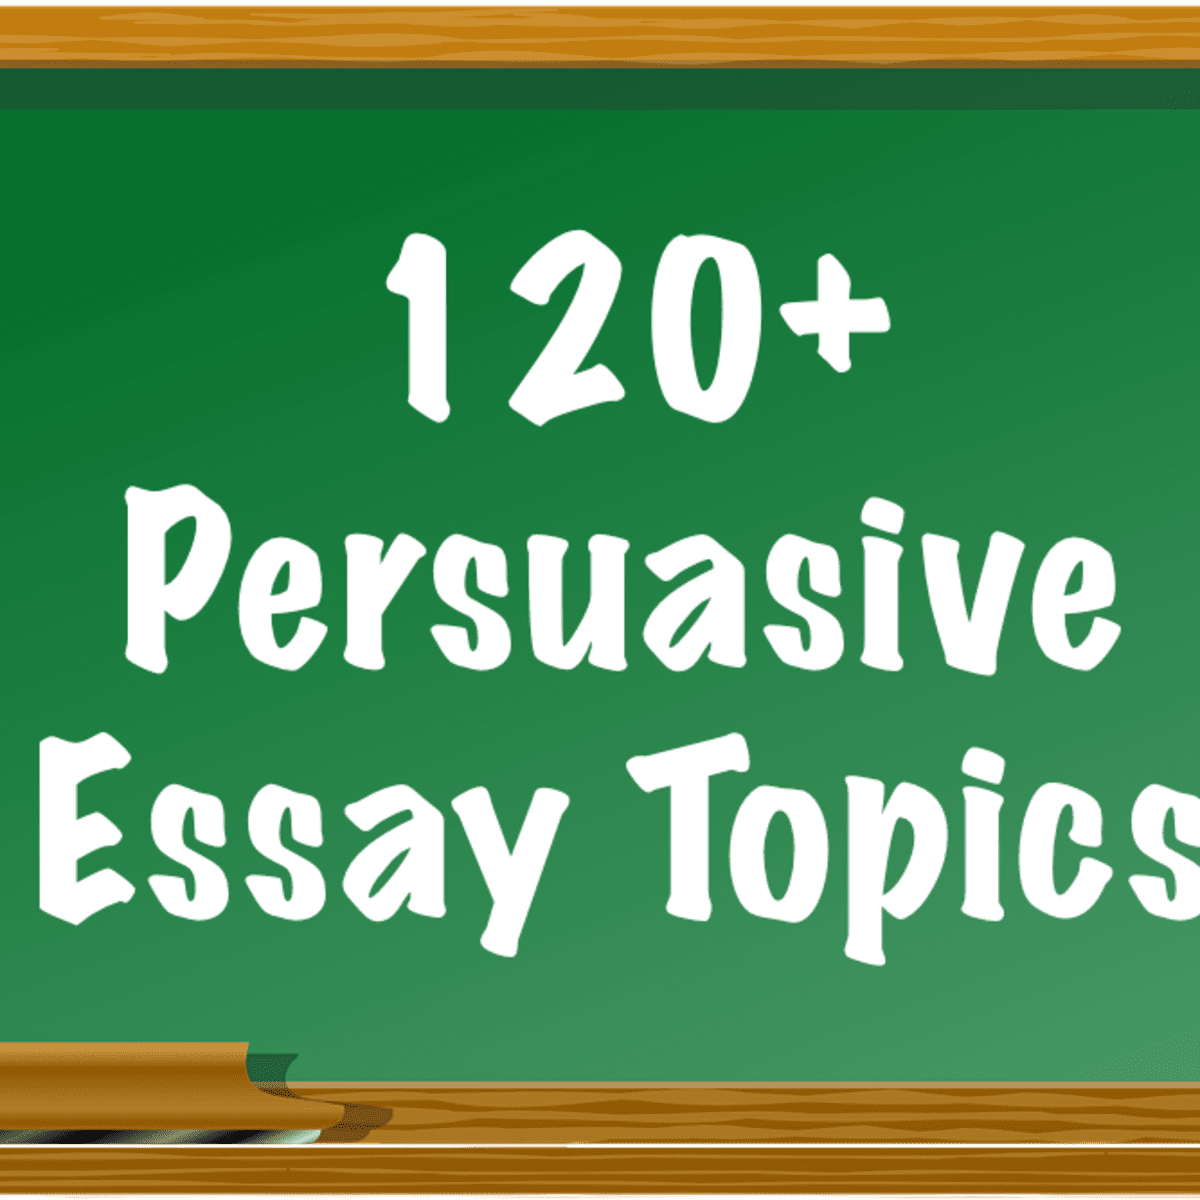 good persuasive essay topics for middle school students